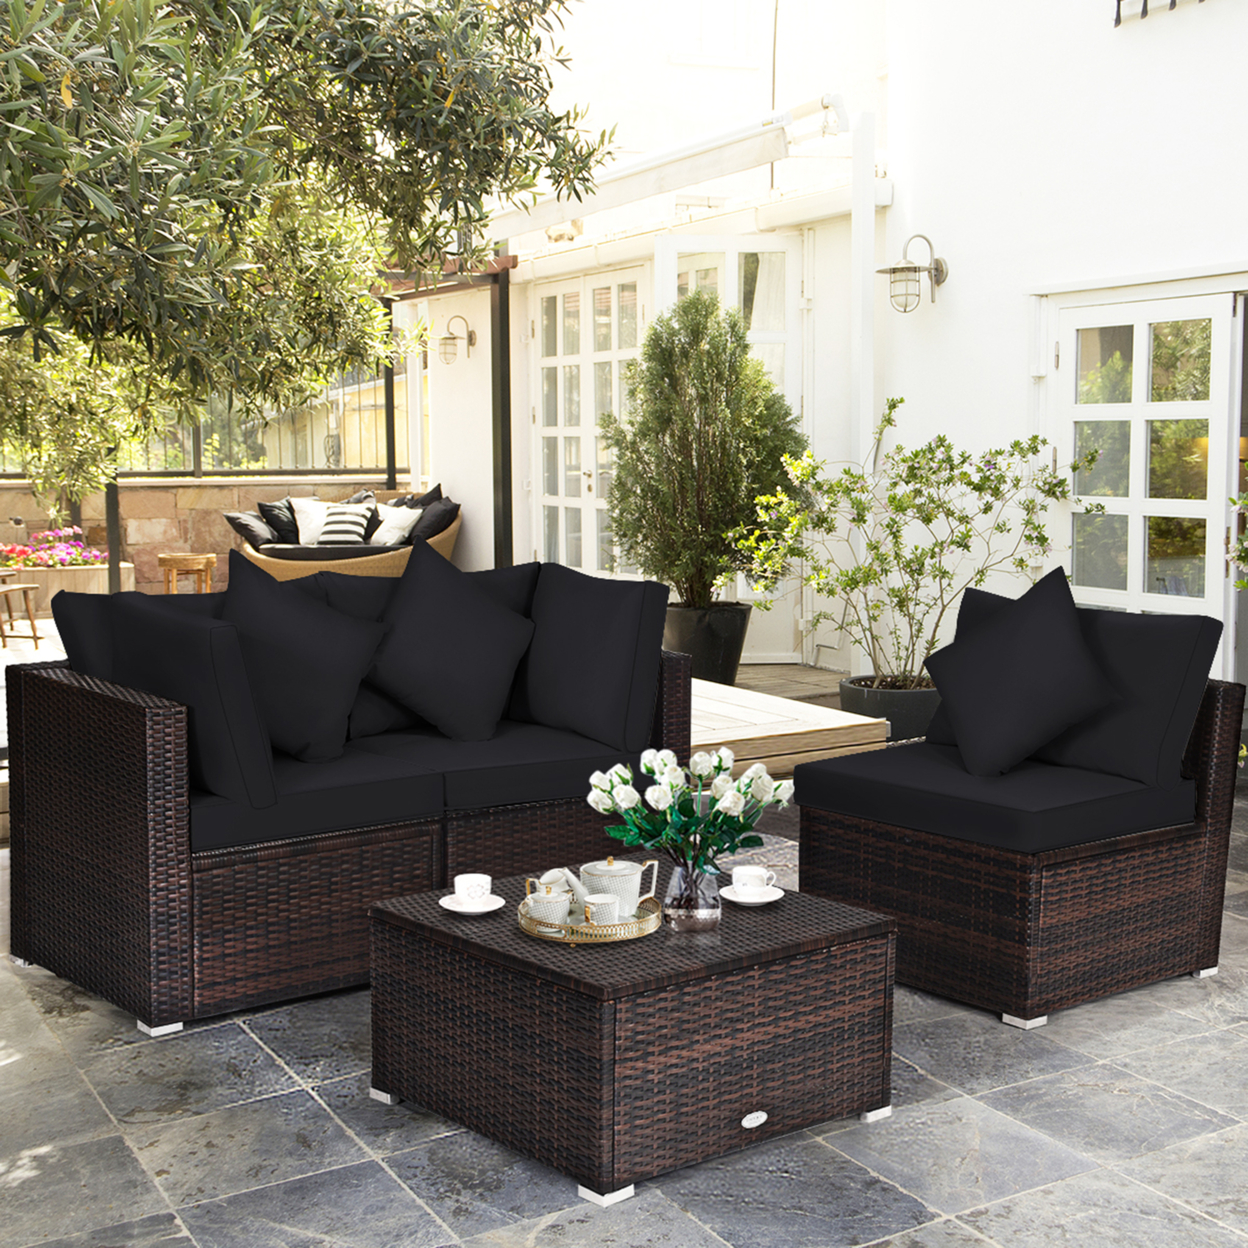 4PCS Rattan Patio Conversation Furniture Set Yard Outdoor W/ Black Cushion